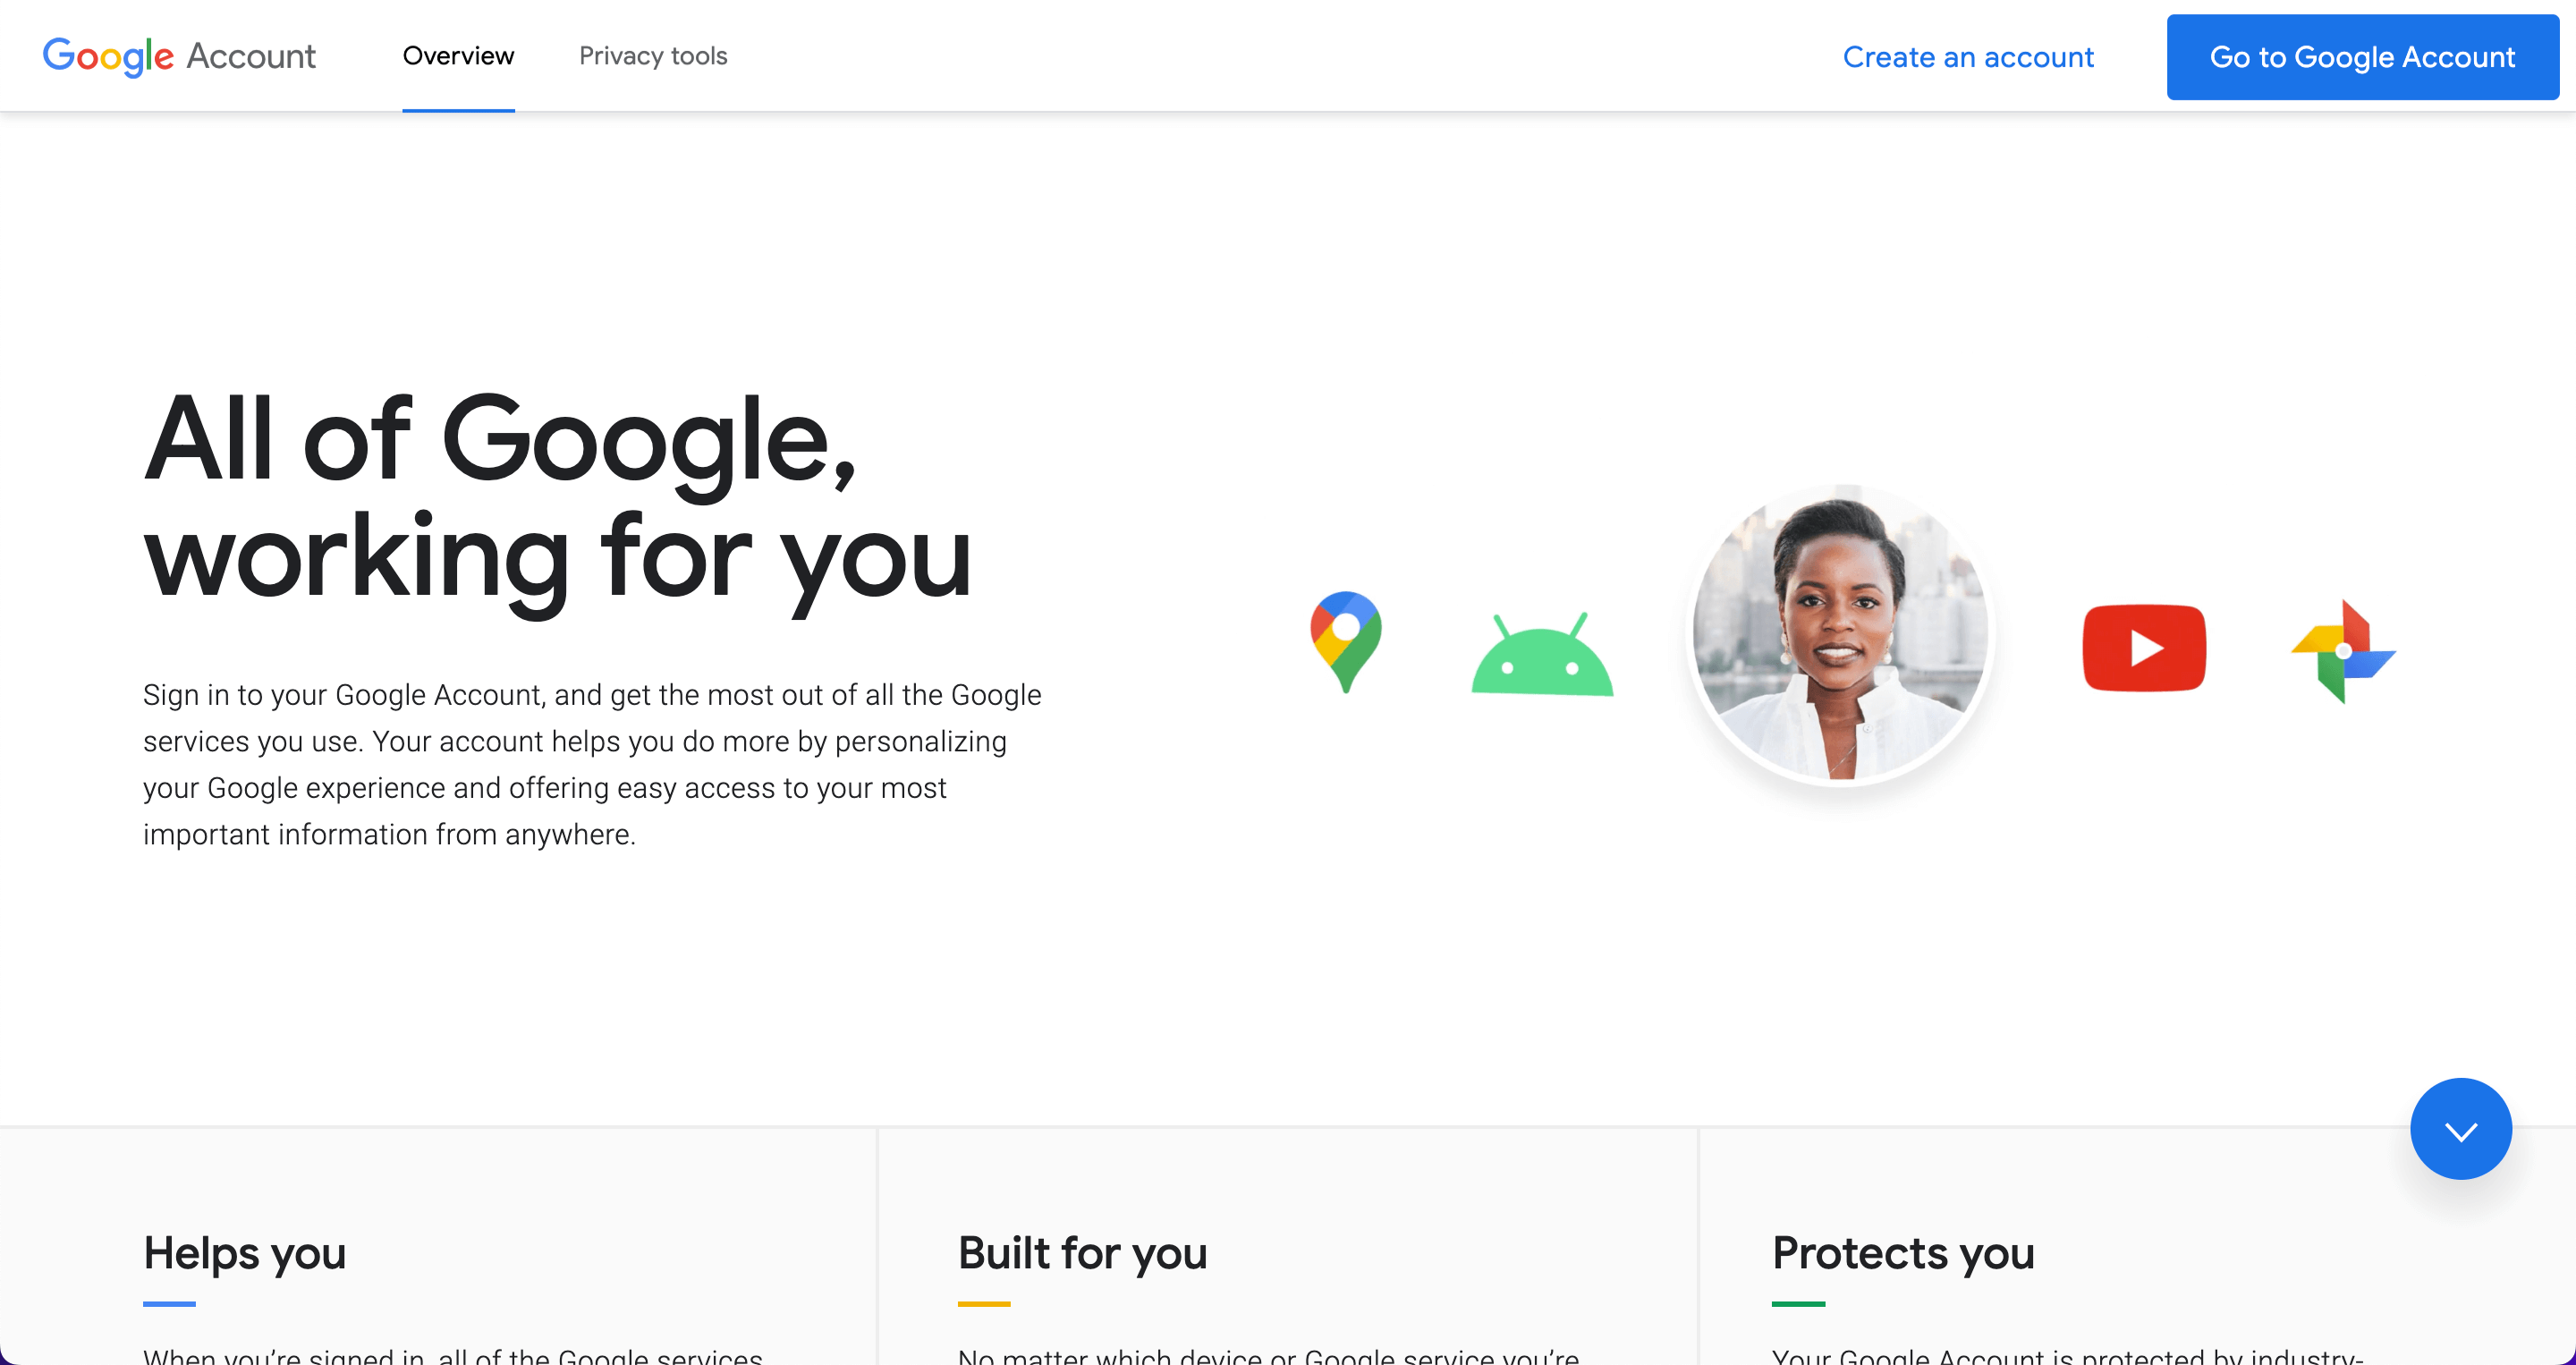 Google Account welcome screen